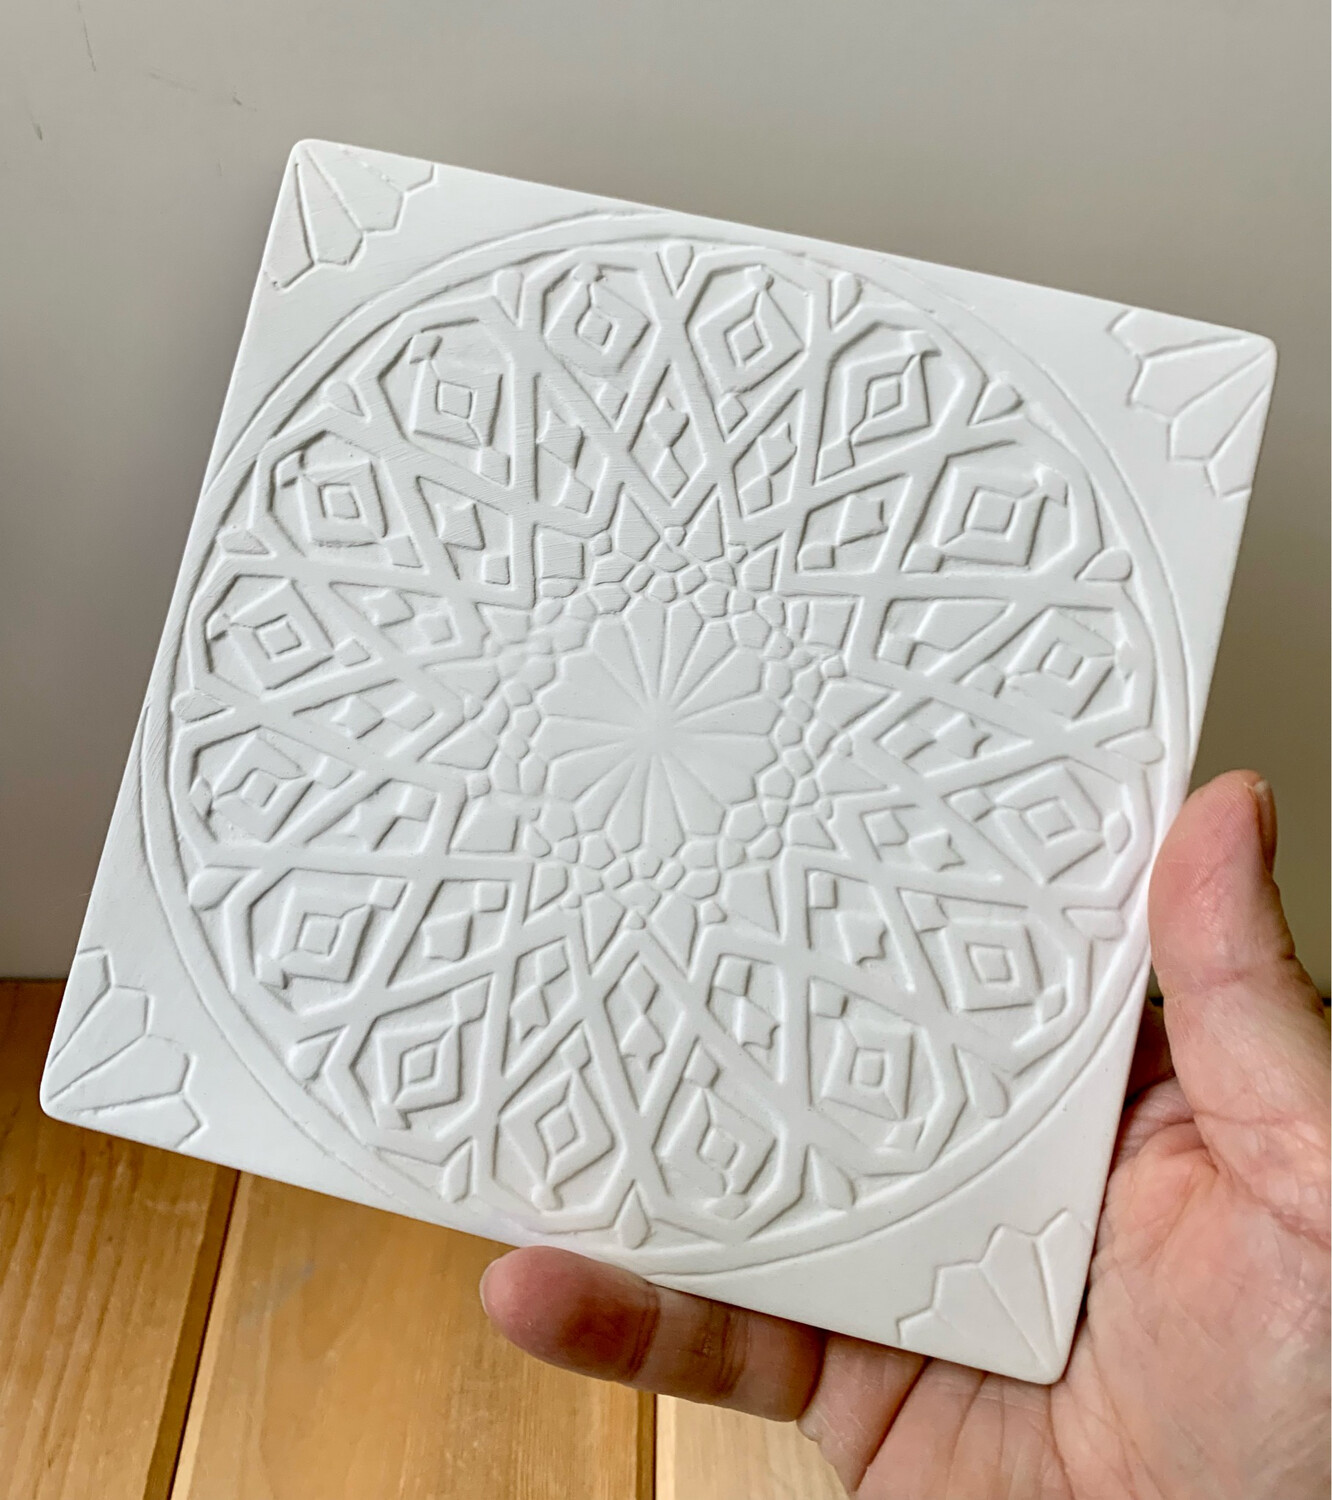 Paint Your Own Pottery - Ceramic Woven Mandala Tile Painting Kit